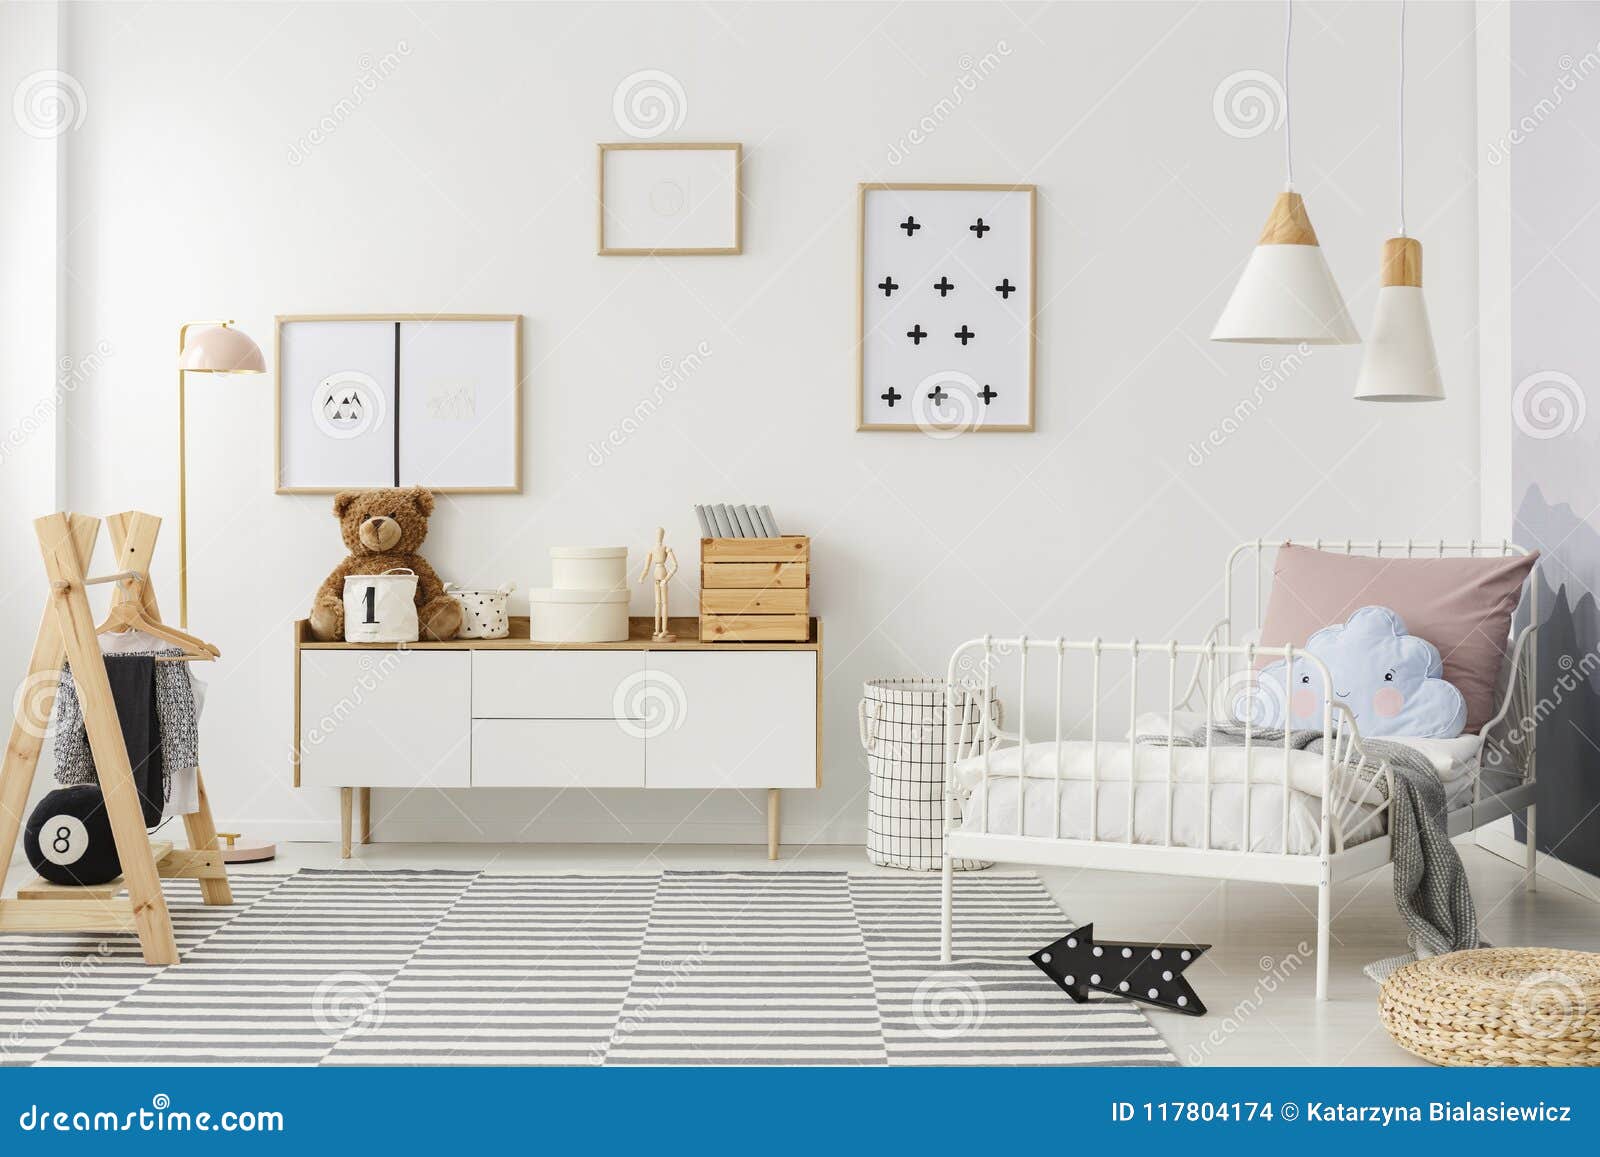 scandi kid`s bedroom interior